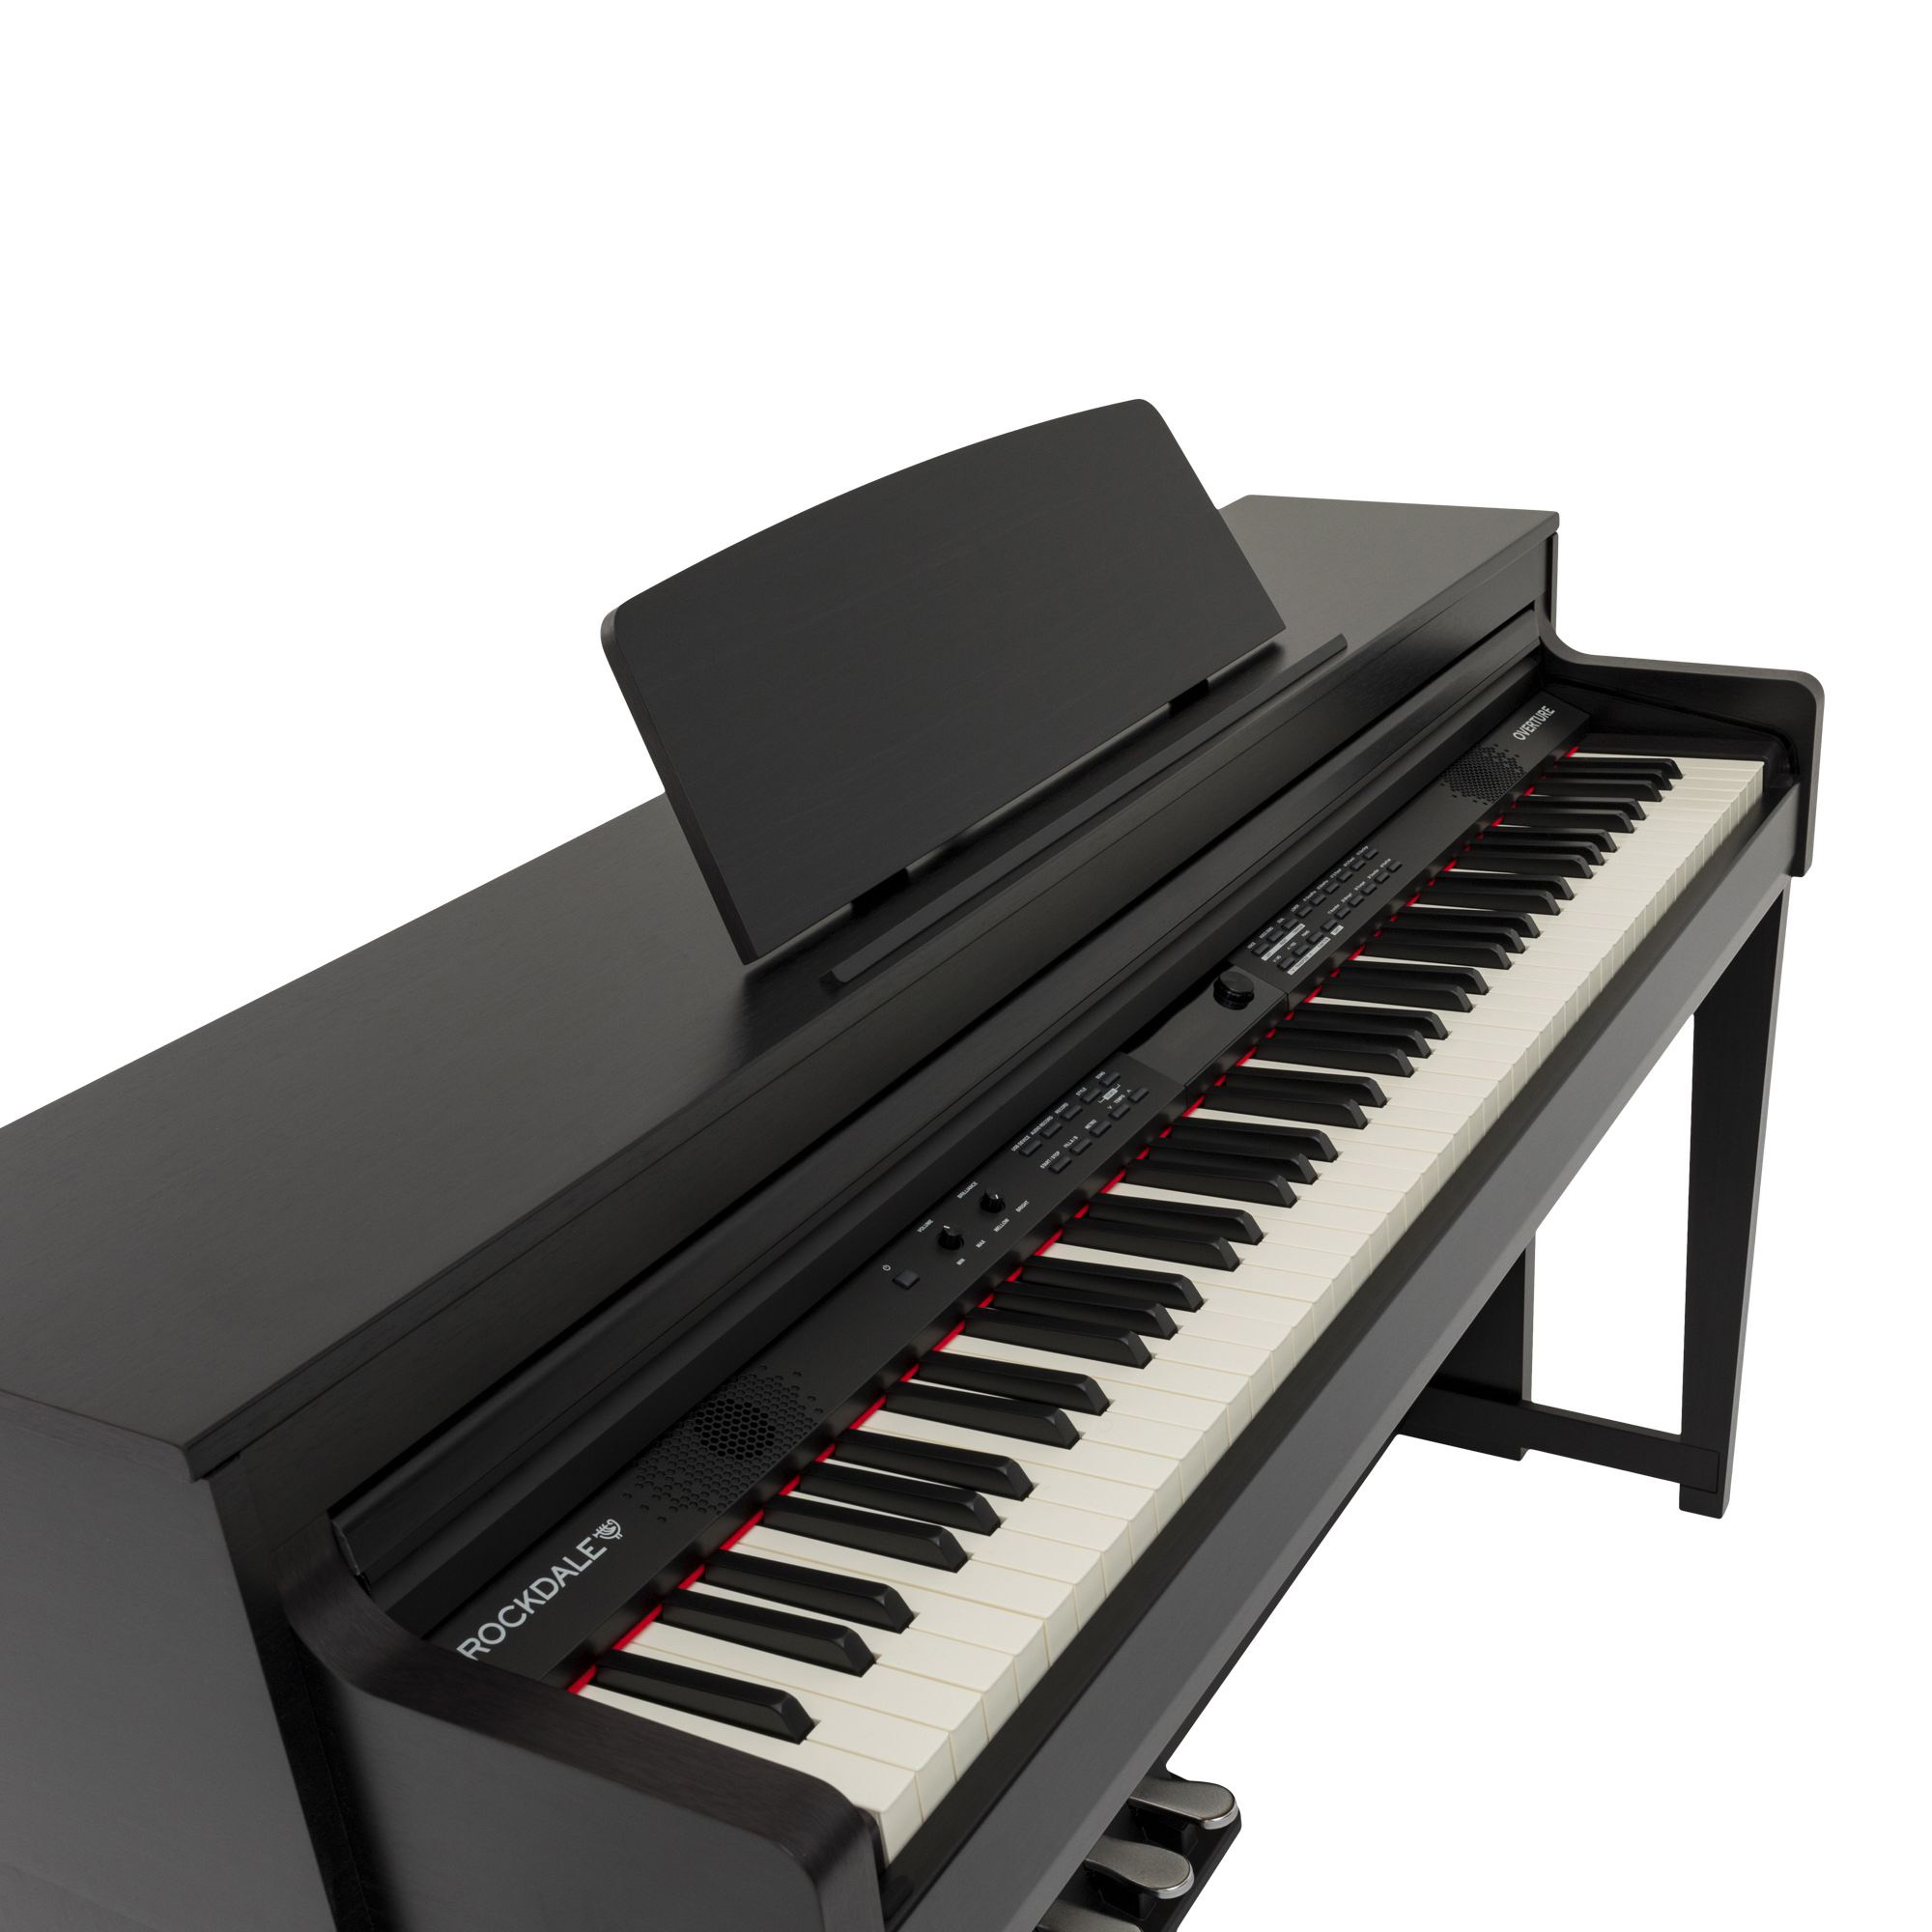 Rockdale Overture Rosewood Цифровые пианино